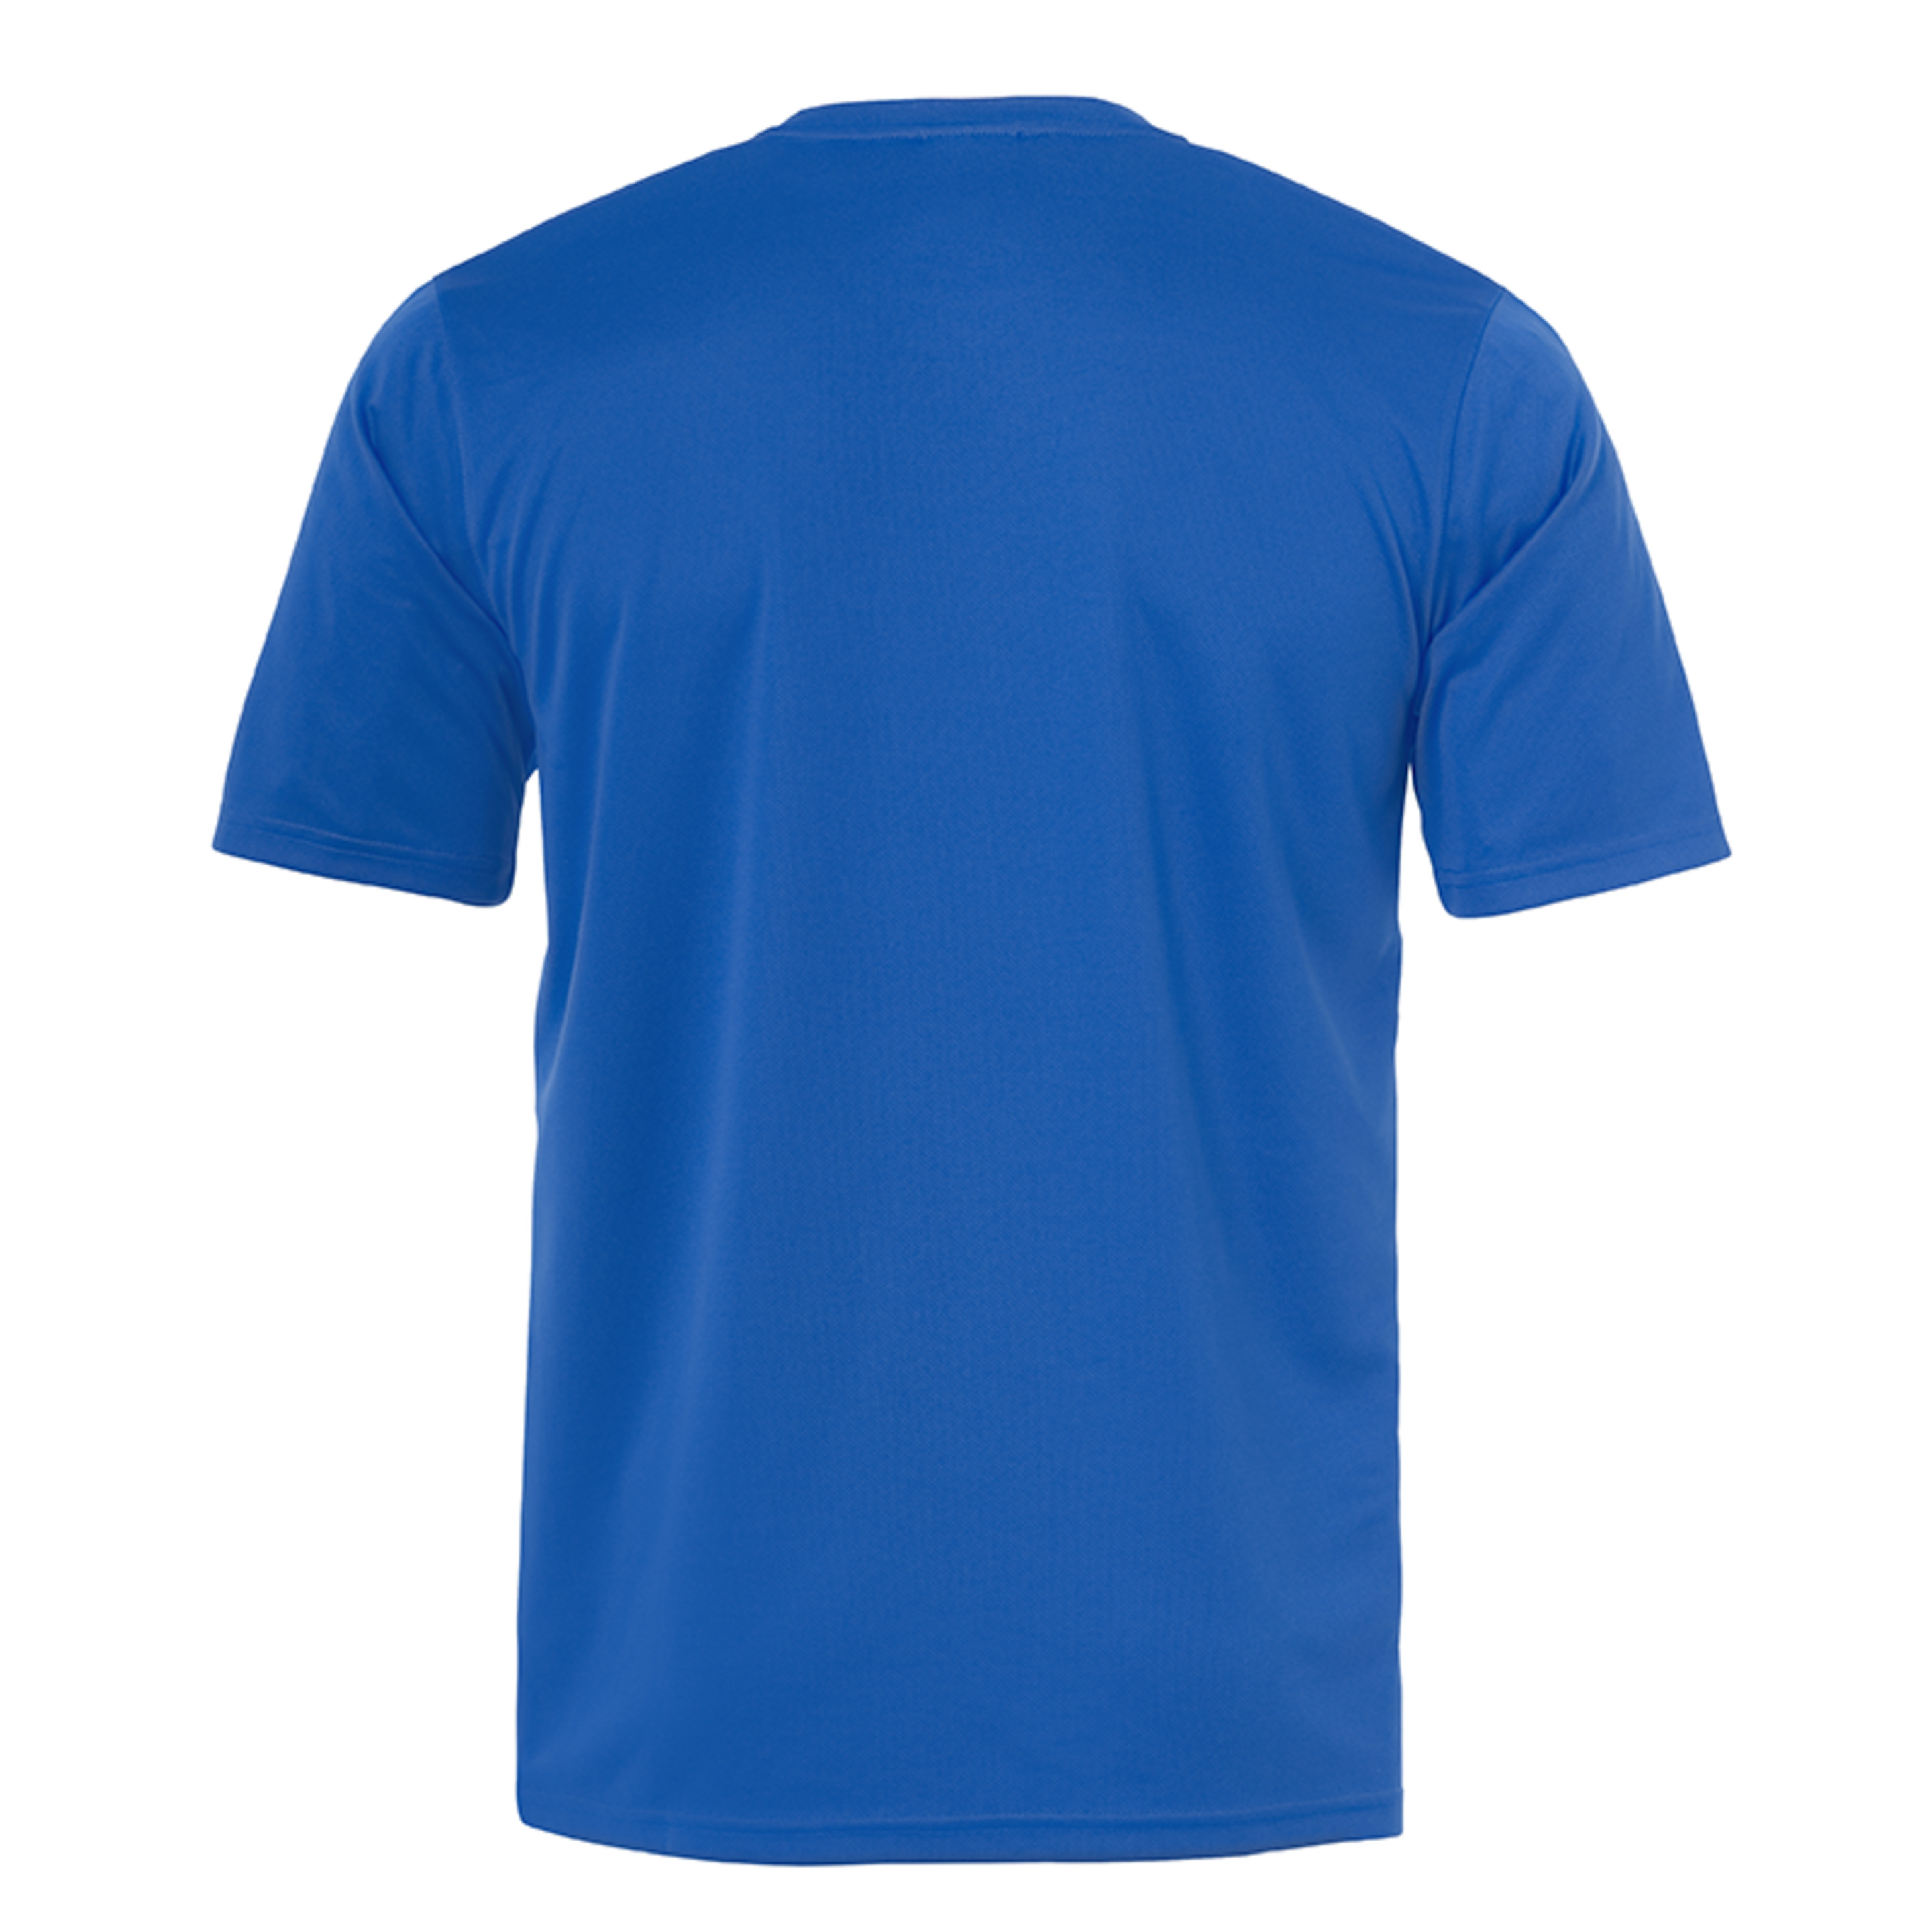 Goal Polyester Training T-shirt Azur/azul Marino Uhlsport